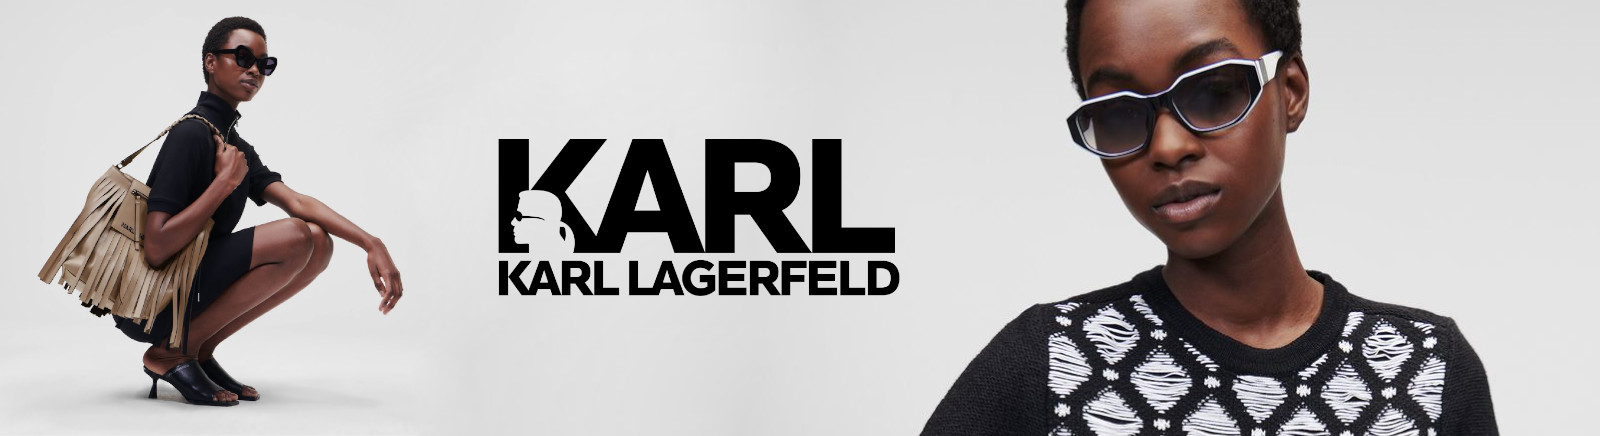 Karl Lagerfeld Schuhe & Accessoires bestellen im Juppen Shop